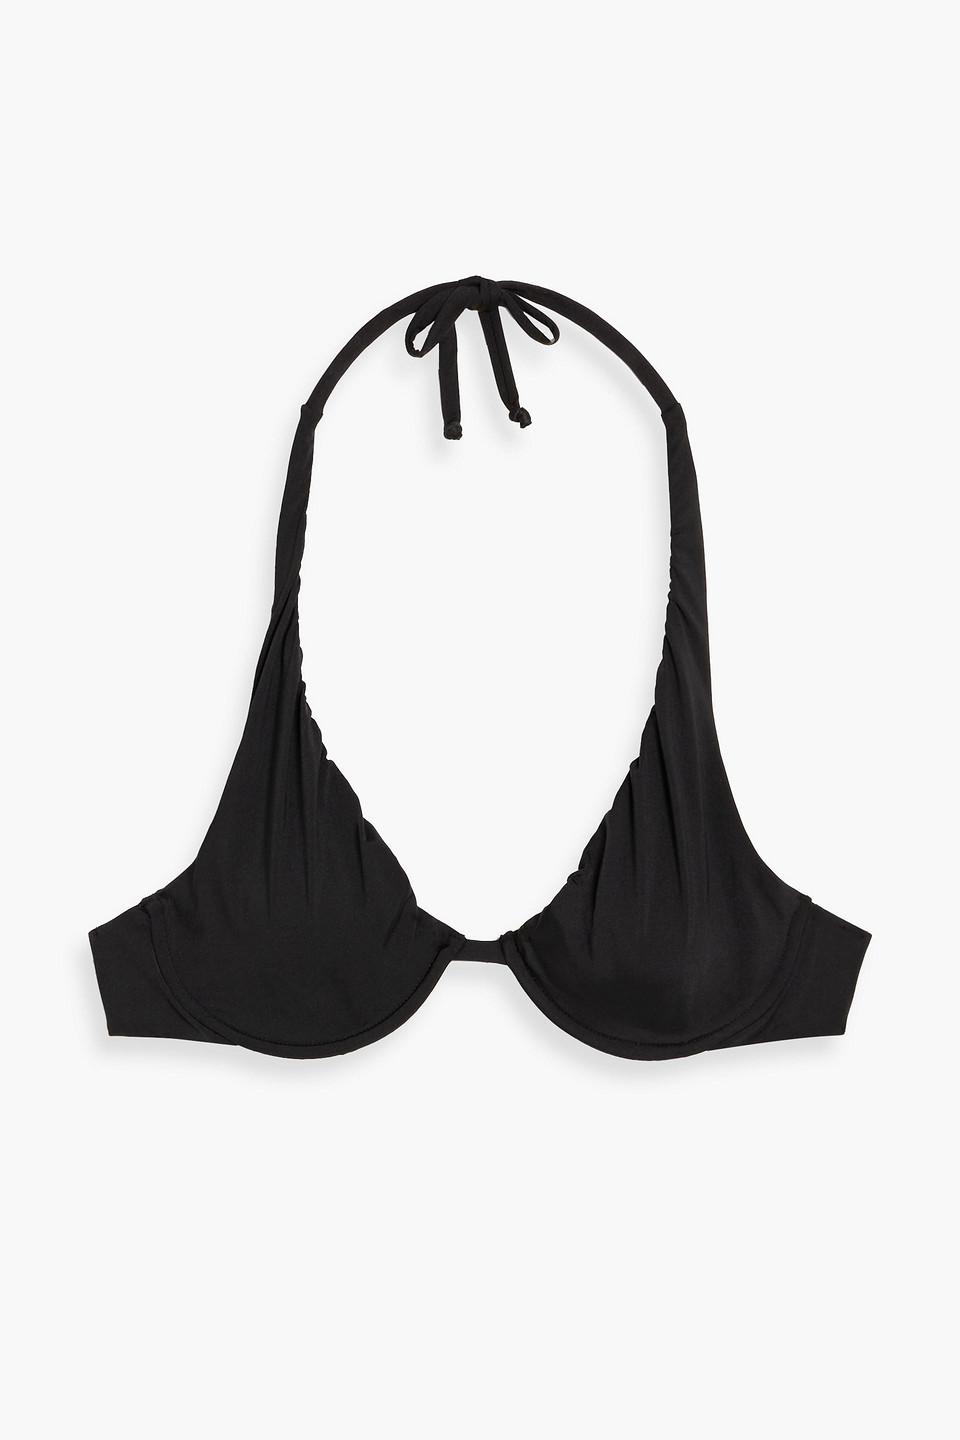 Iris & Ink Alexandra Ruched Underwired Bikini Top in Black | Lyst